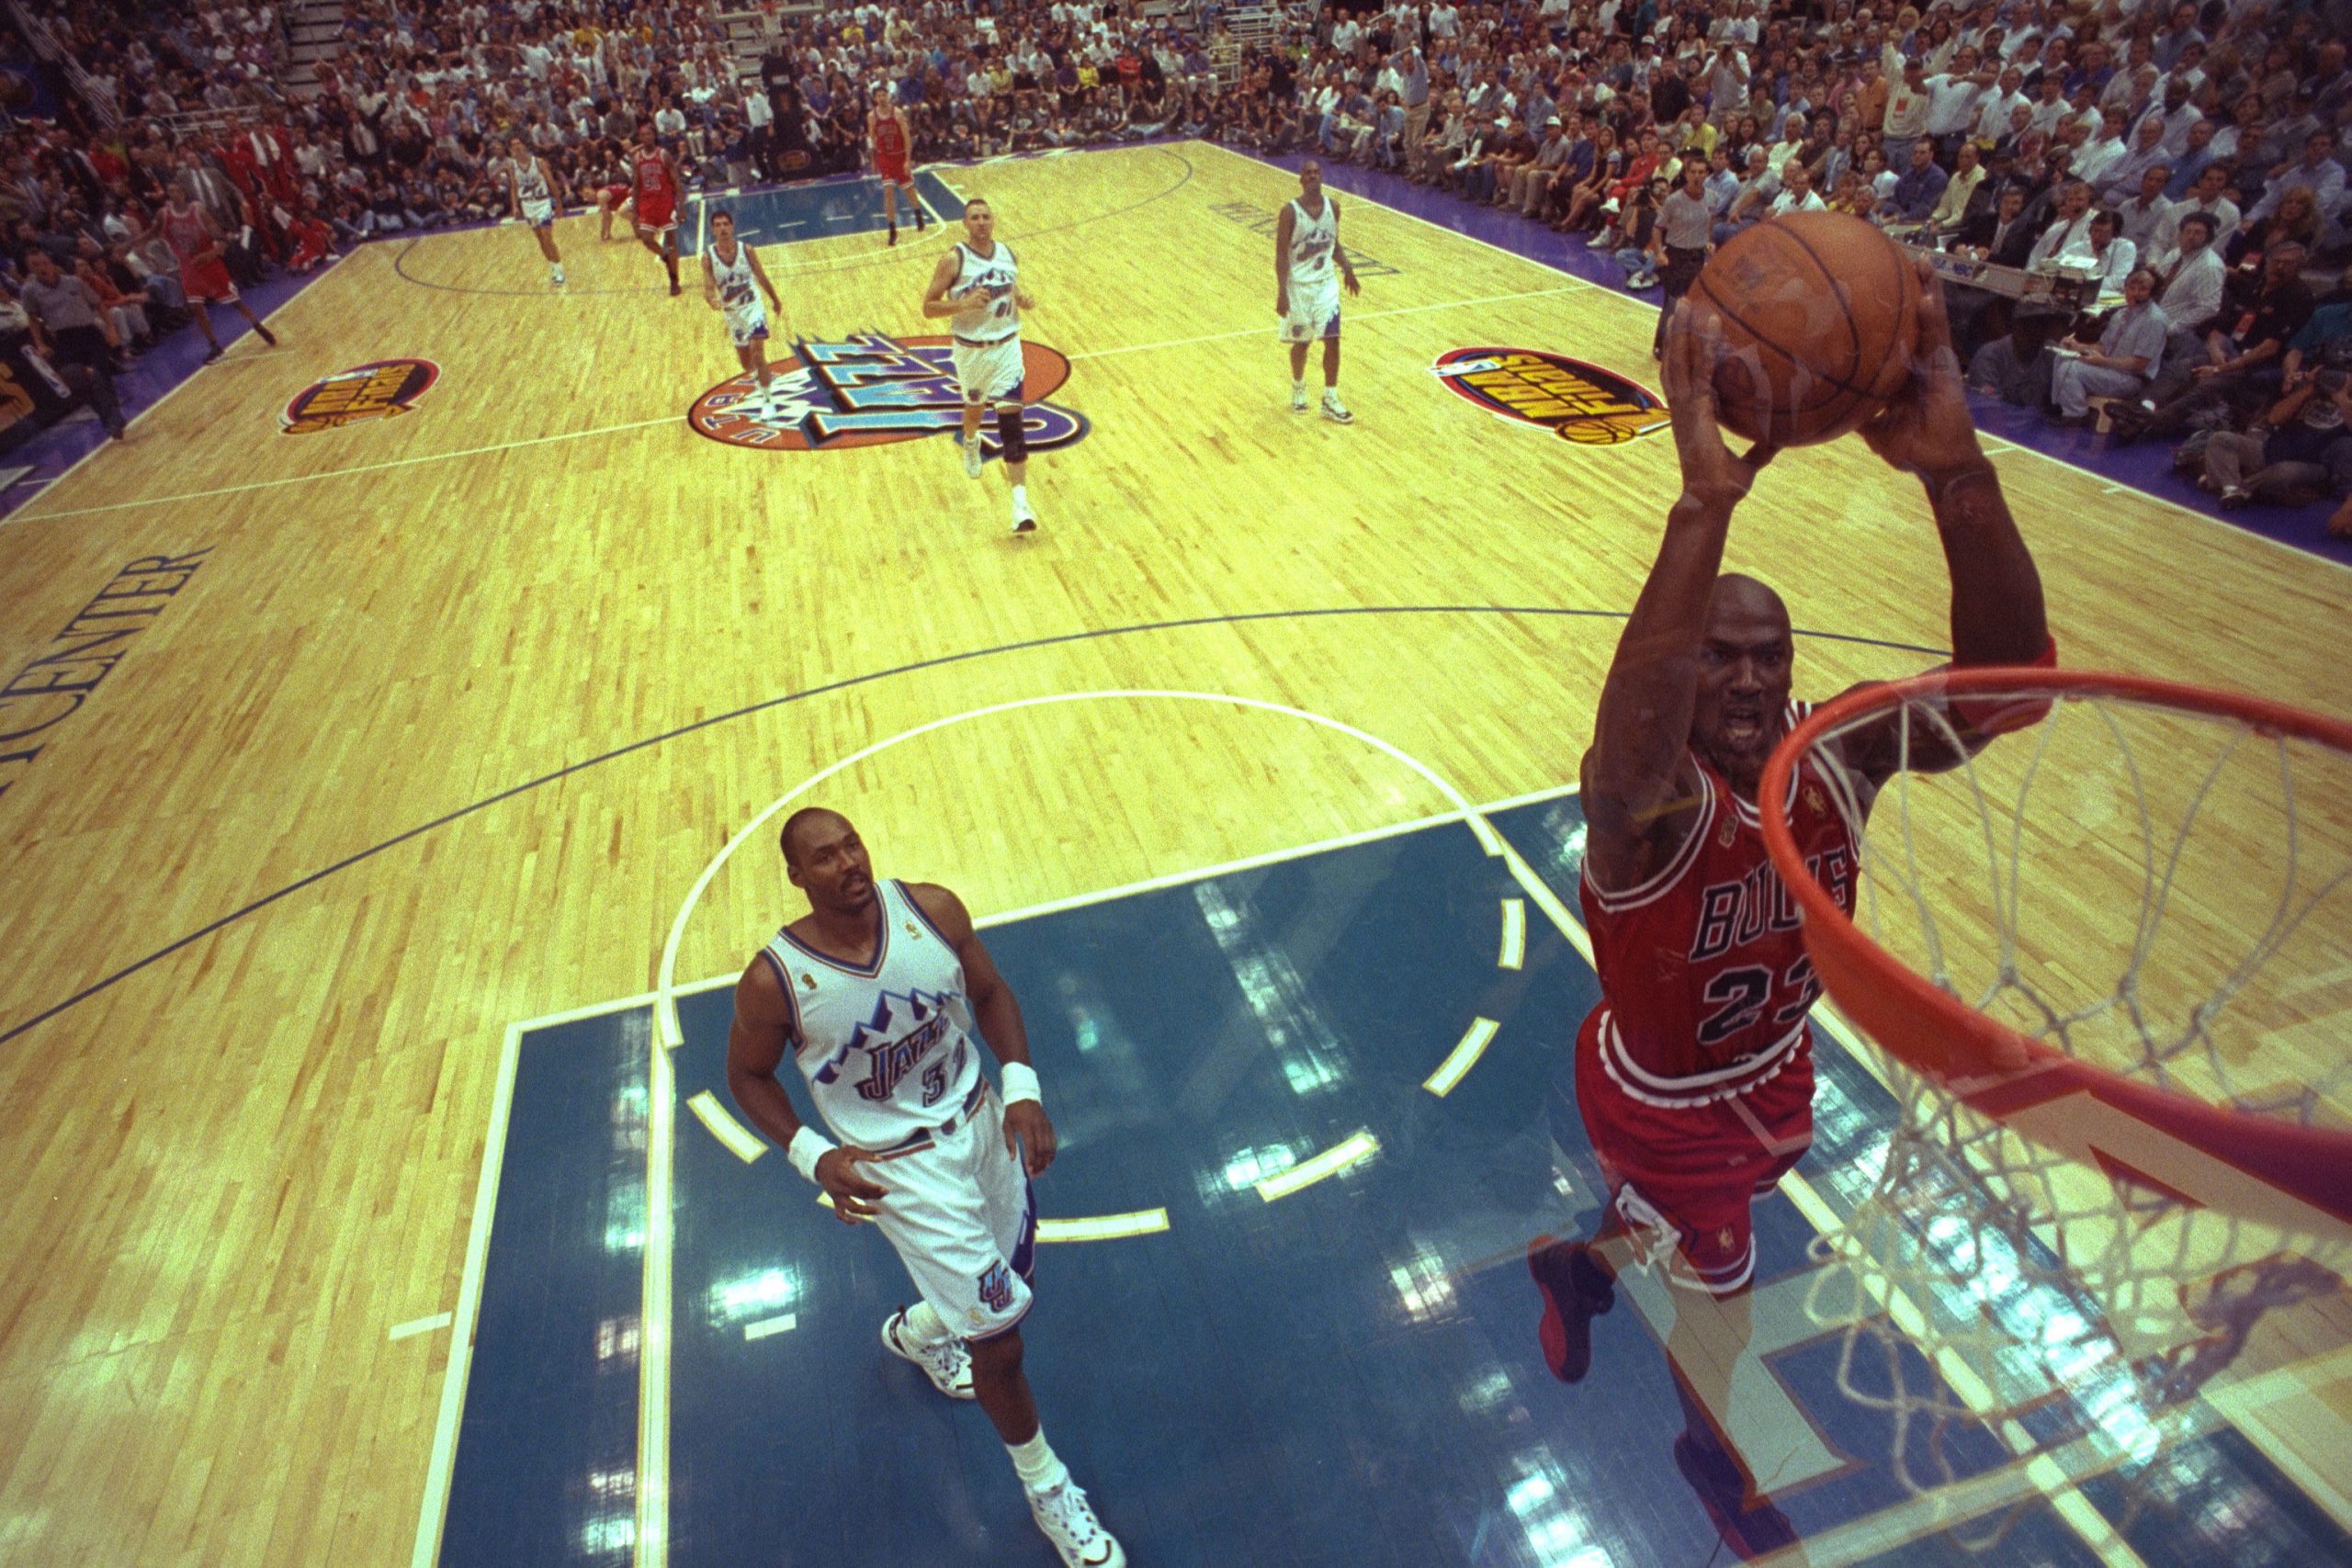 Michael Jordan dunks during the NBA Finals in 1997.